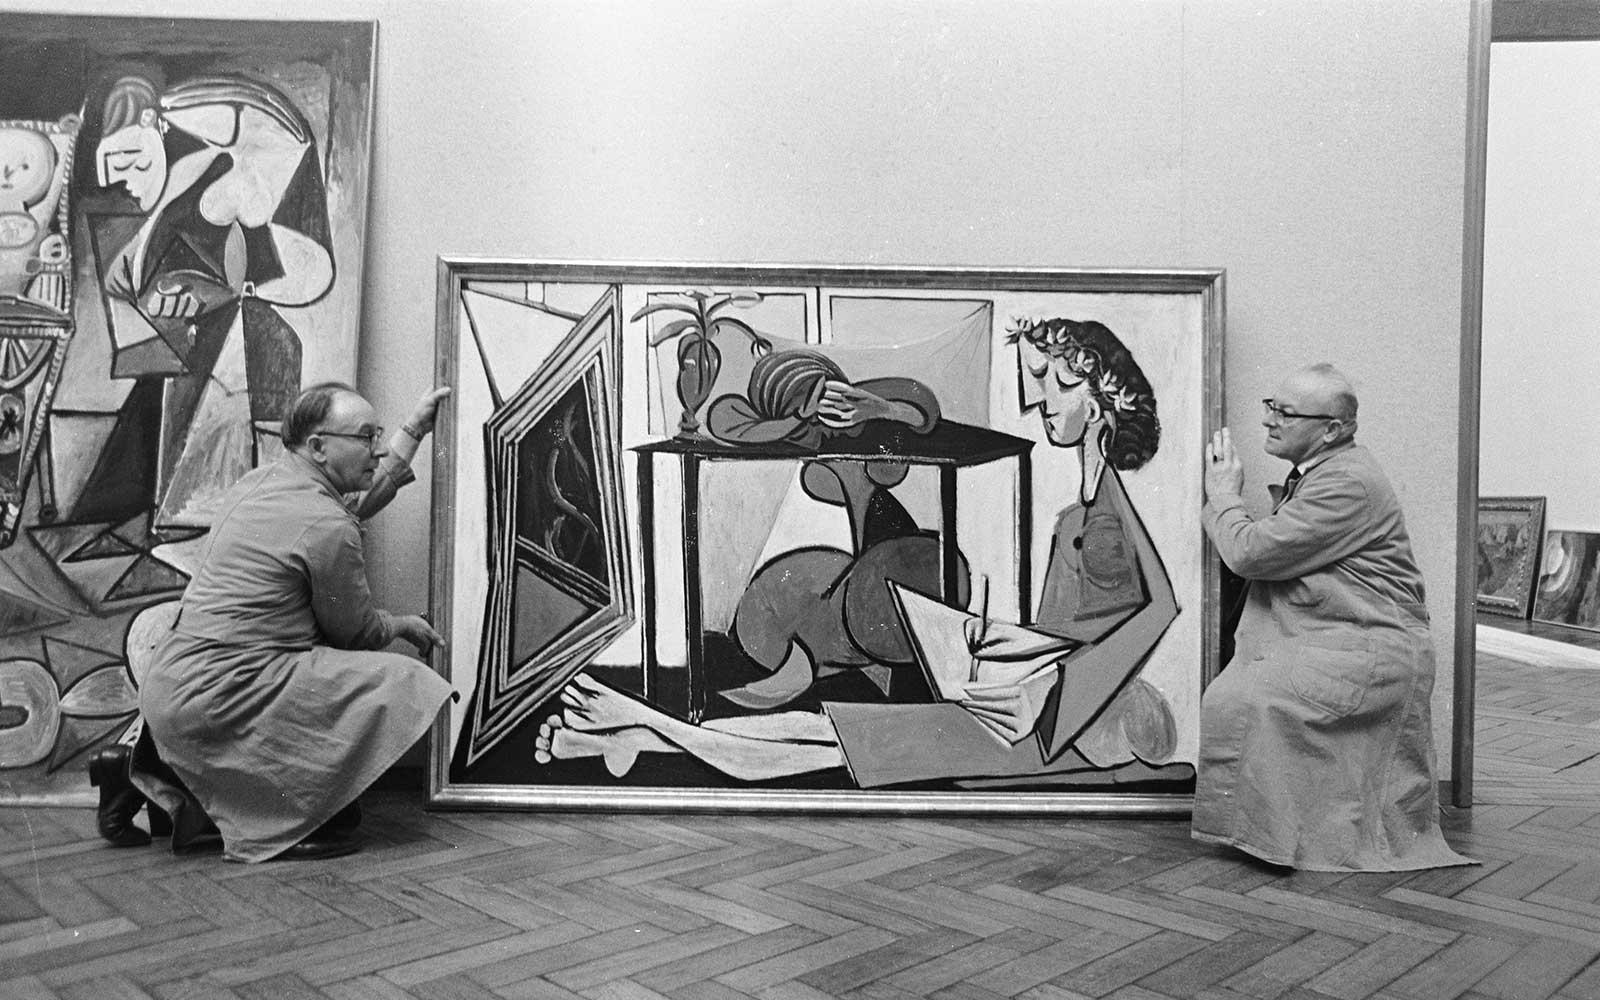 Men setting up Picasso paintings in the Stedelijk Museum, 1967; Jack de Nijs / Anefo, CC0, via Wikimedia Commons